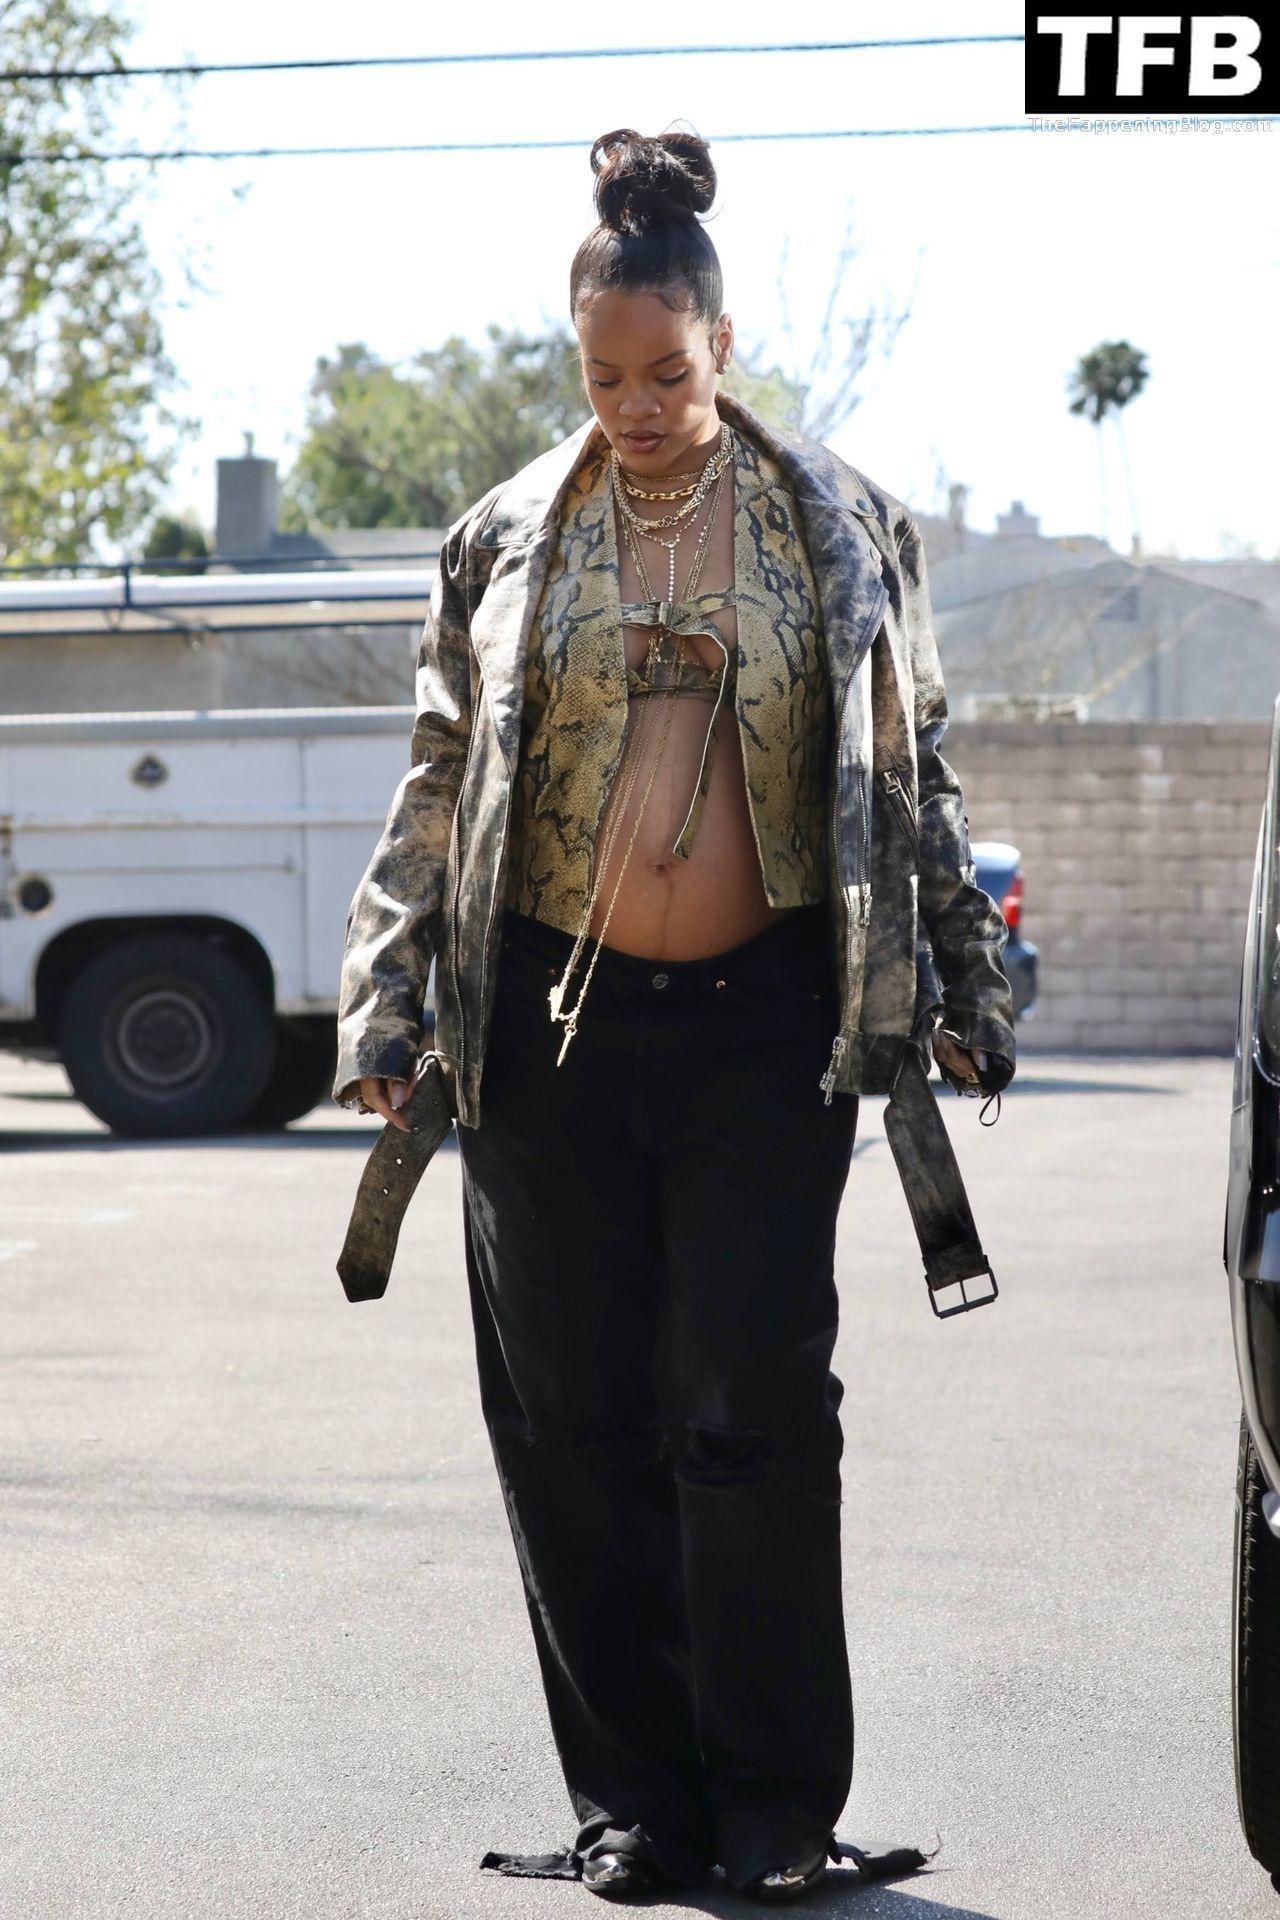 Rihanna-Sexy-The-Fappening-Blog-27-3.jpg